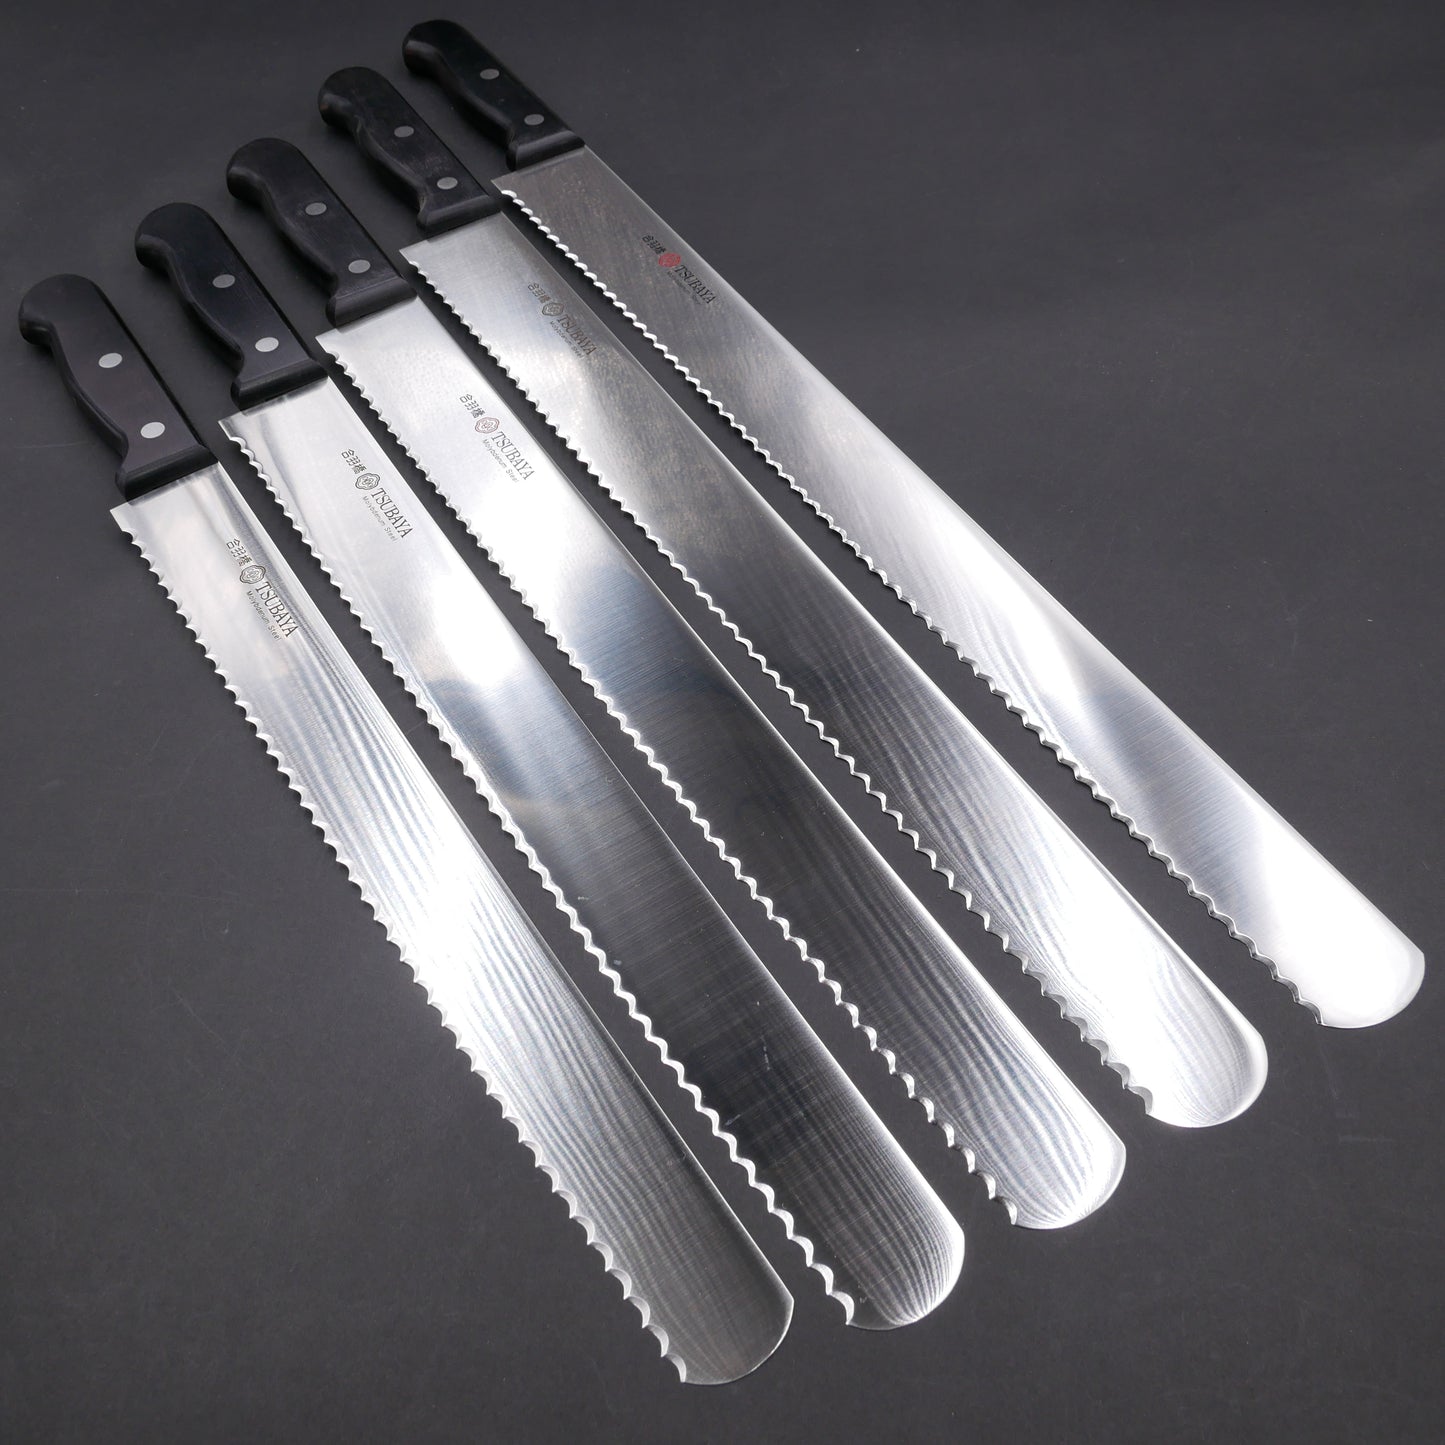 Molybdenum Steel Broad-Blade Bread Knife